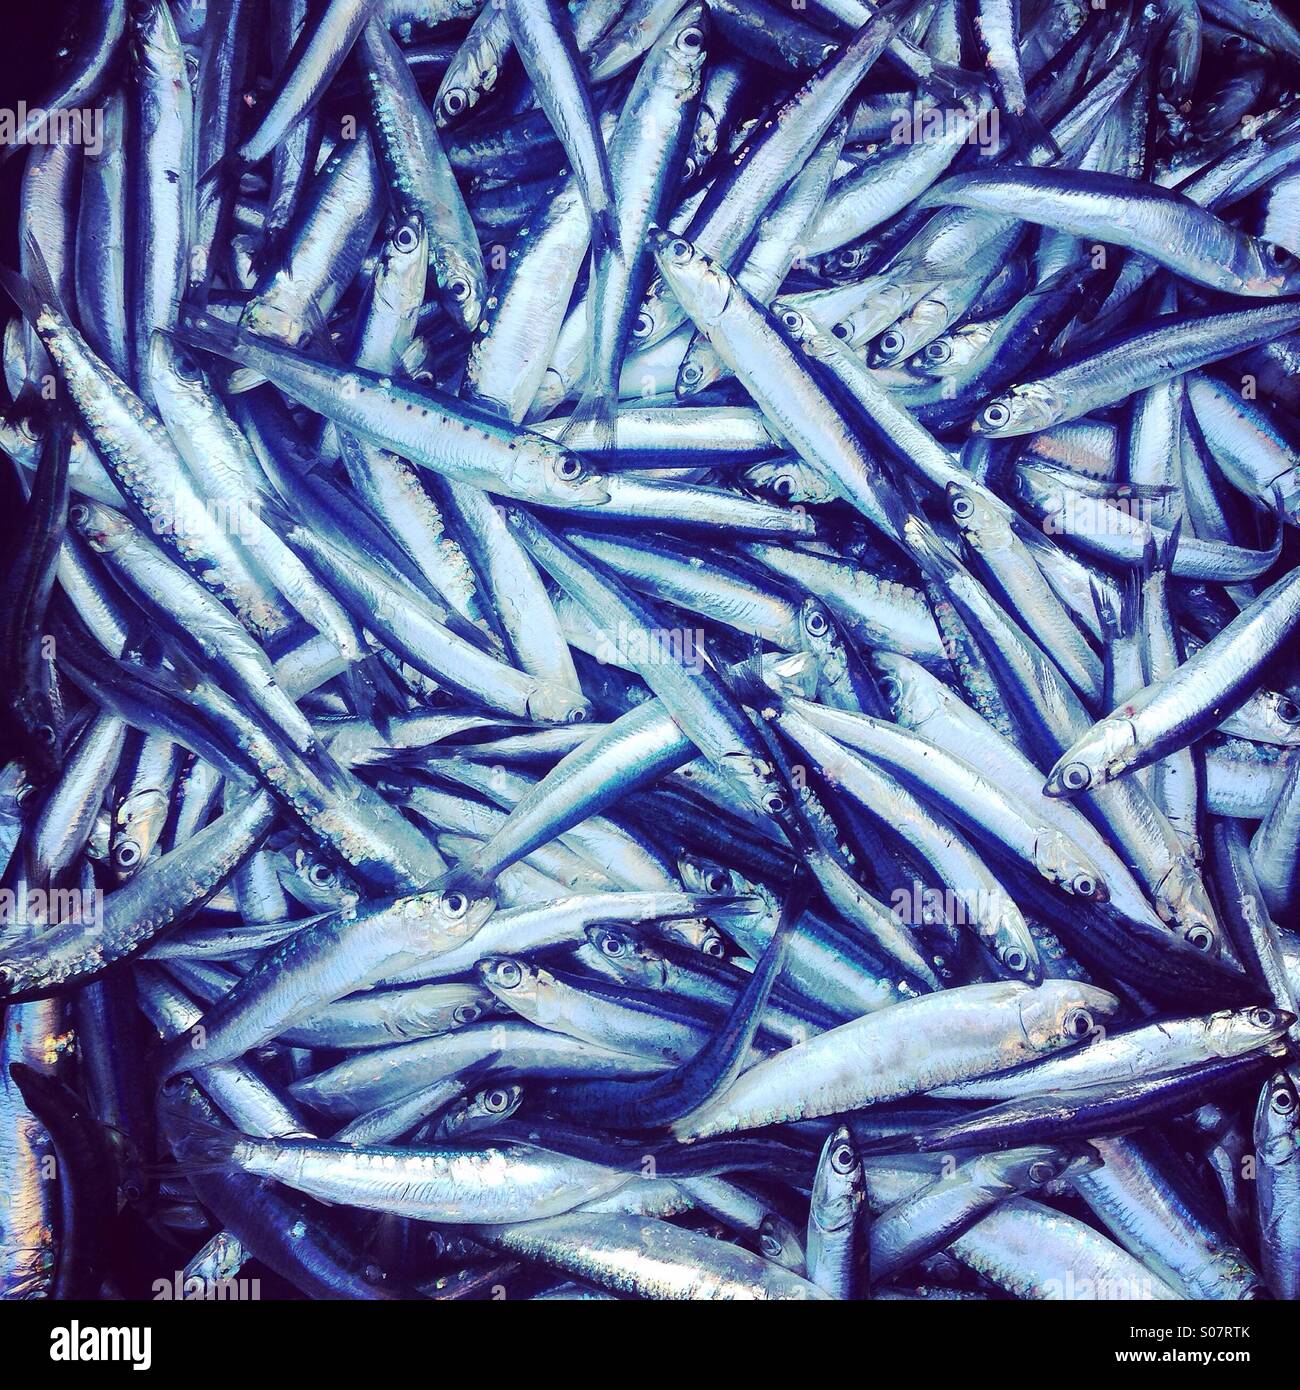 Sardines and anchovies fish close up Stock Photo